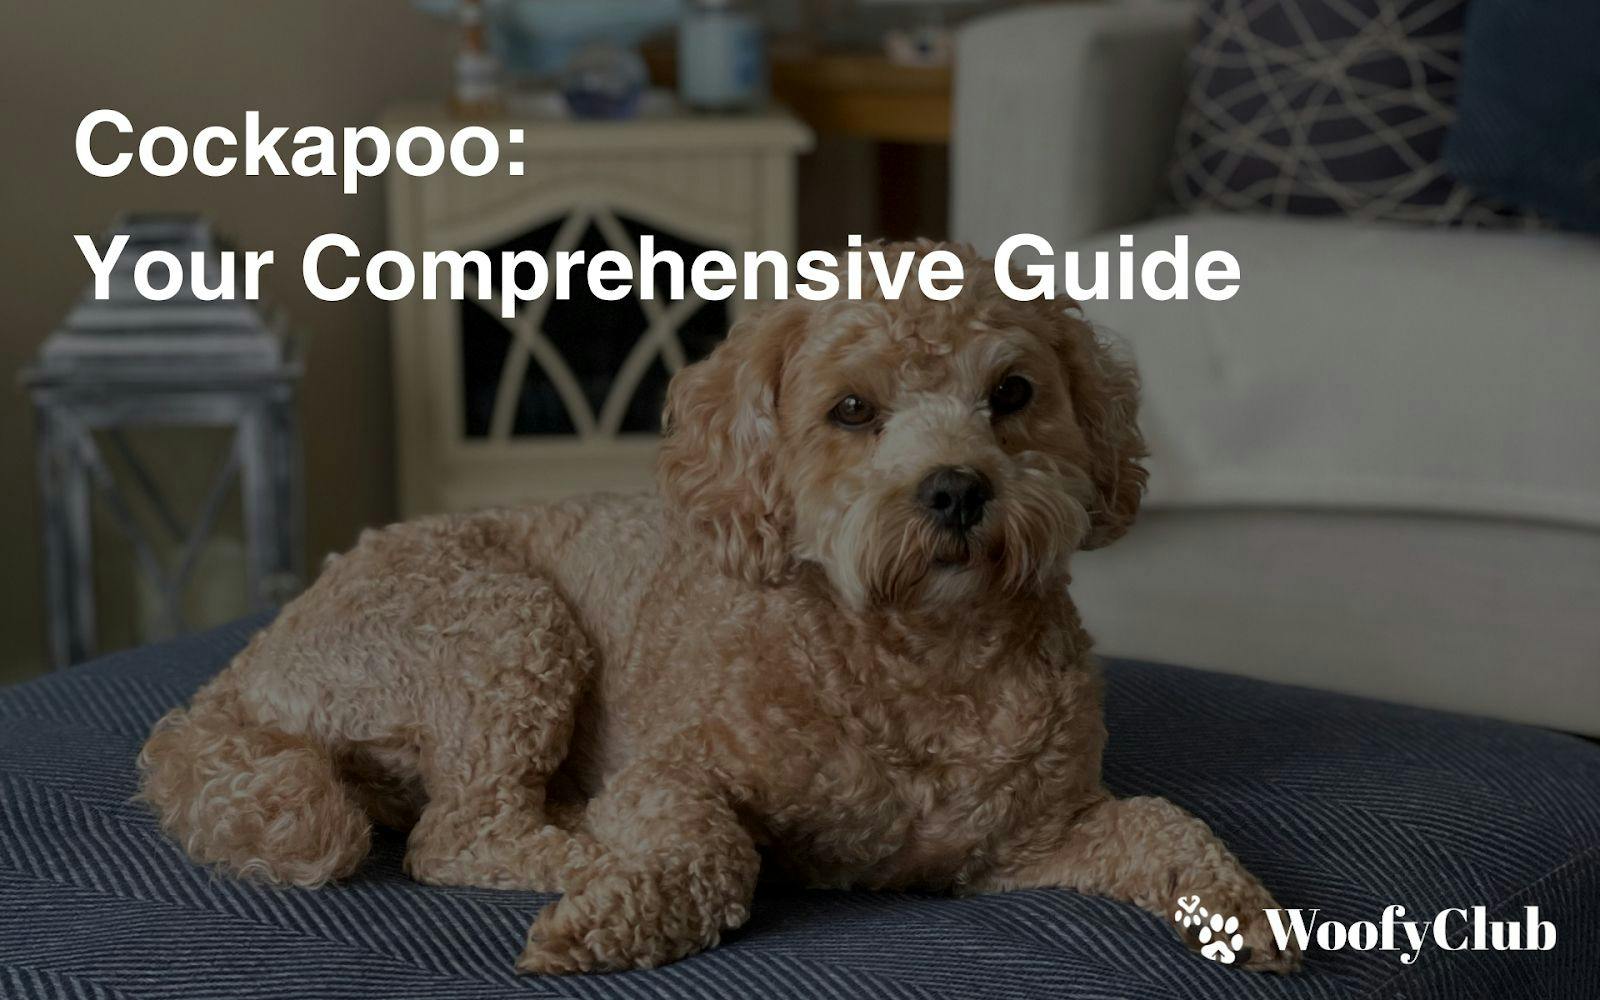 Cockapoo: Your Comprehensive Guide